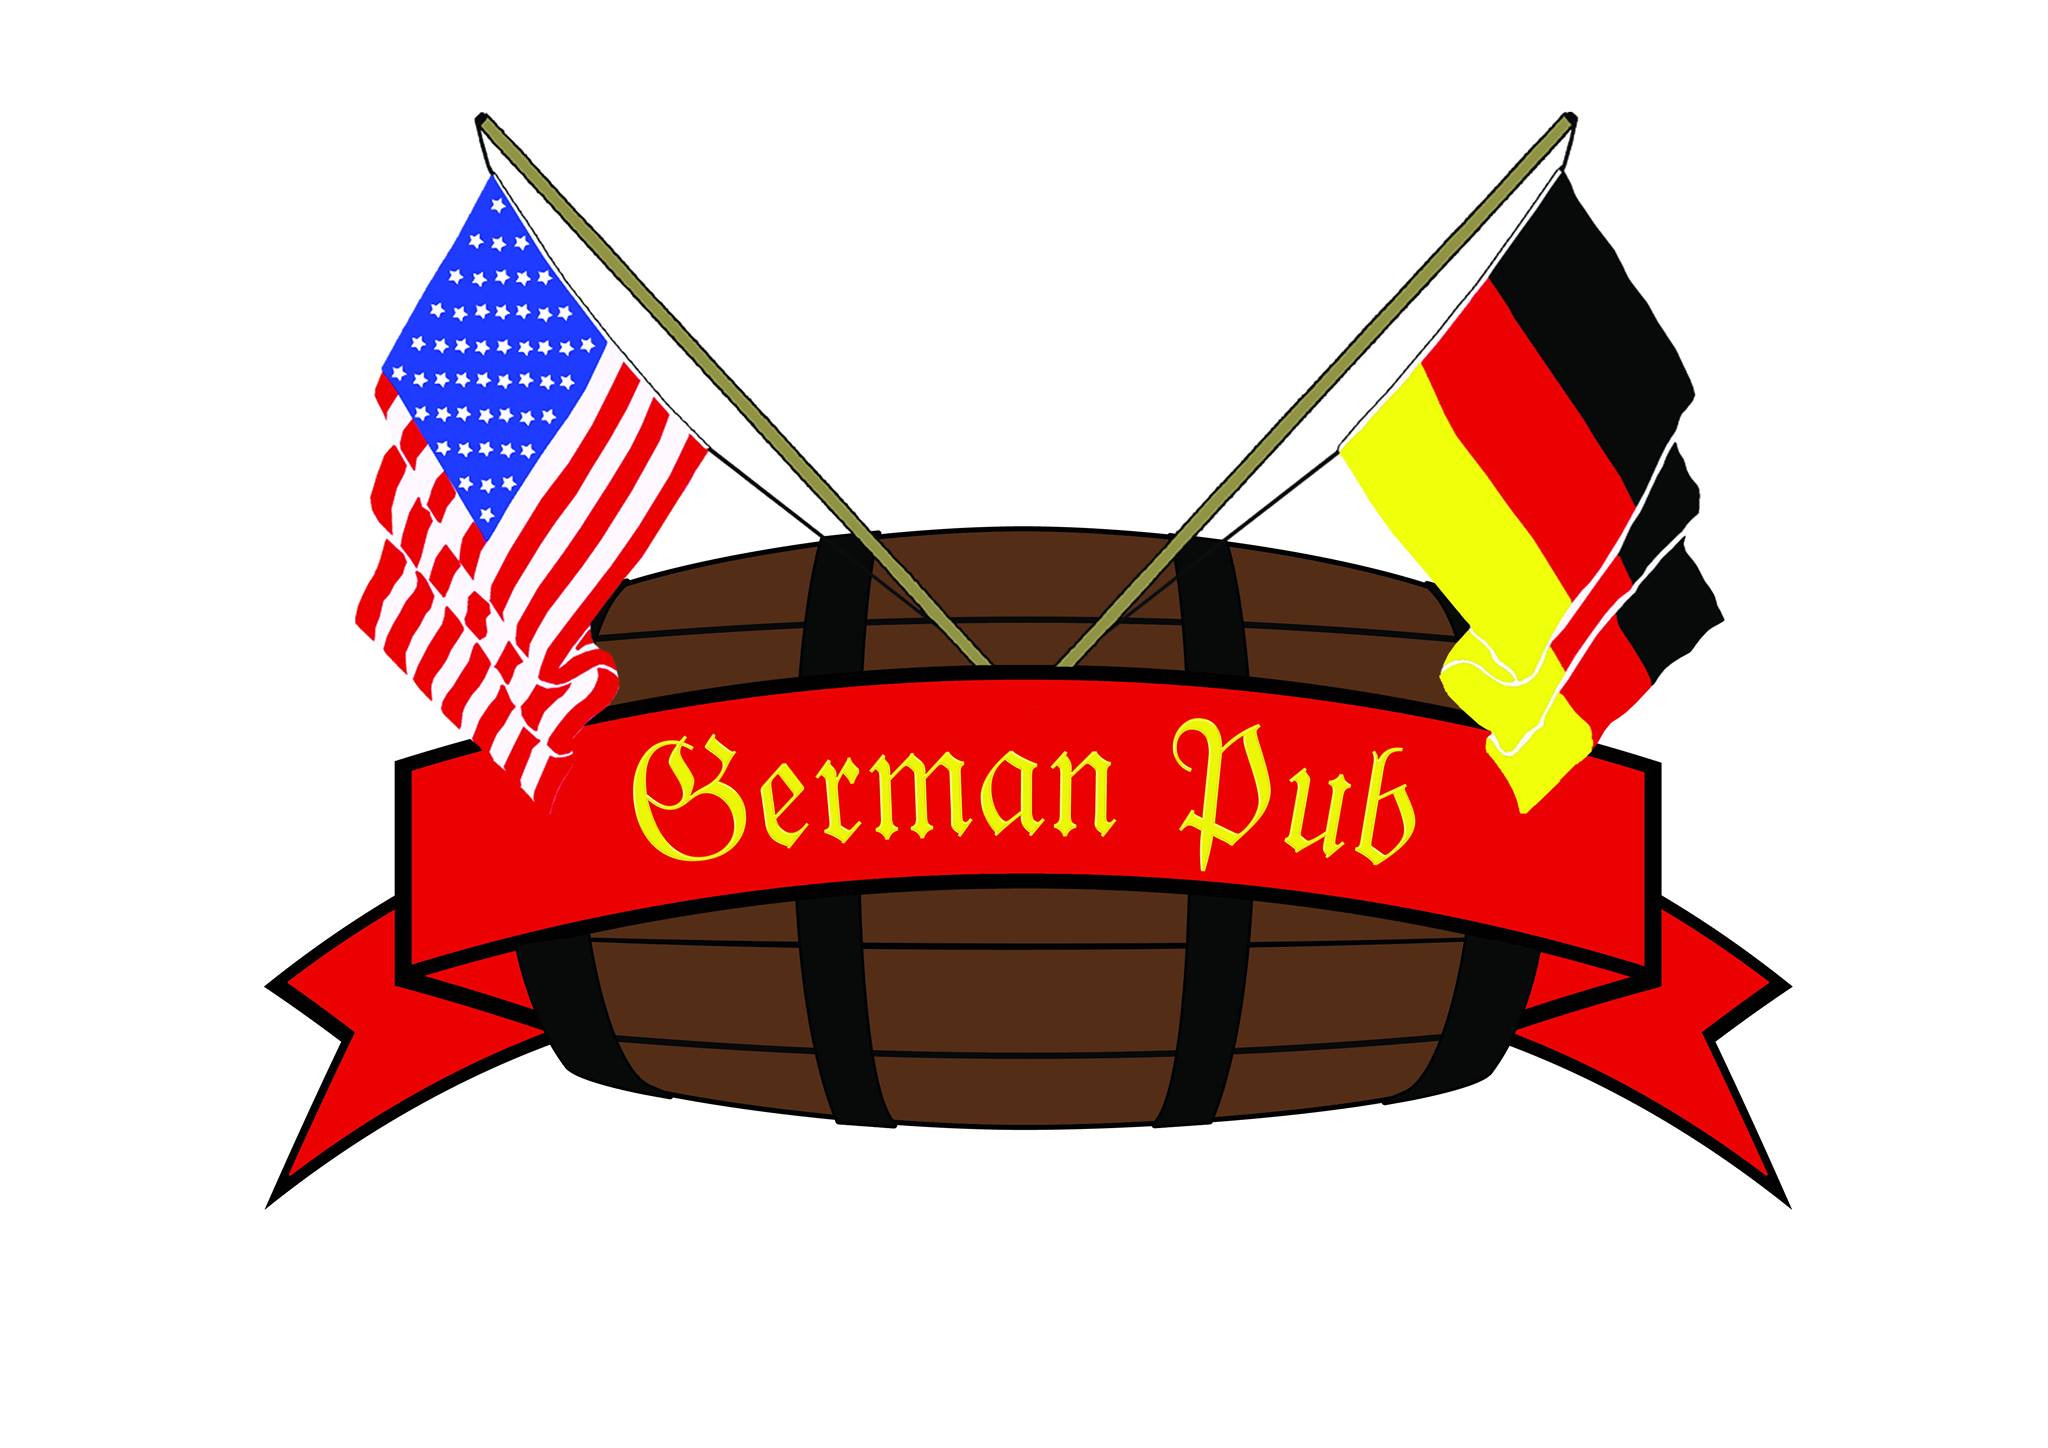 The German Pub